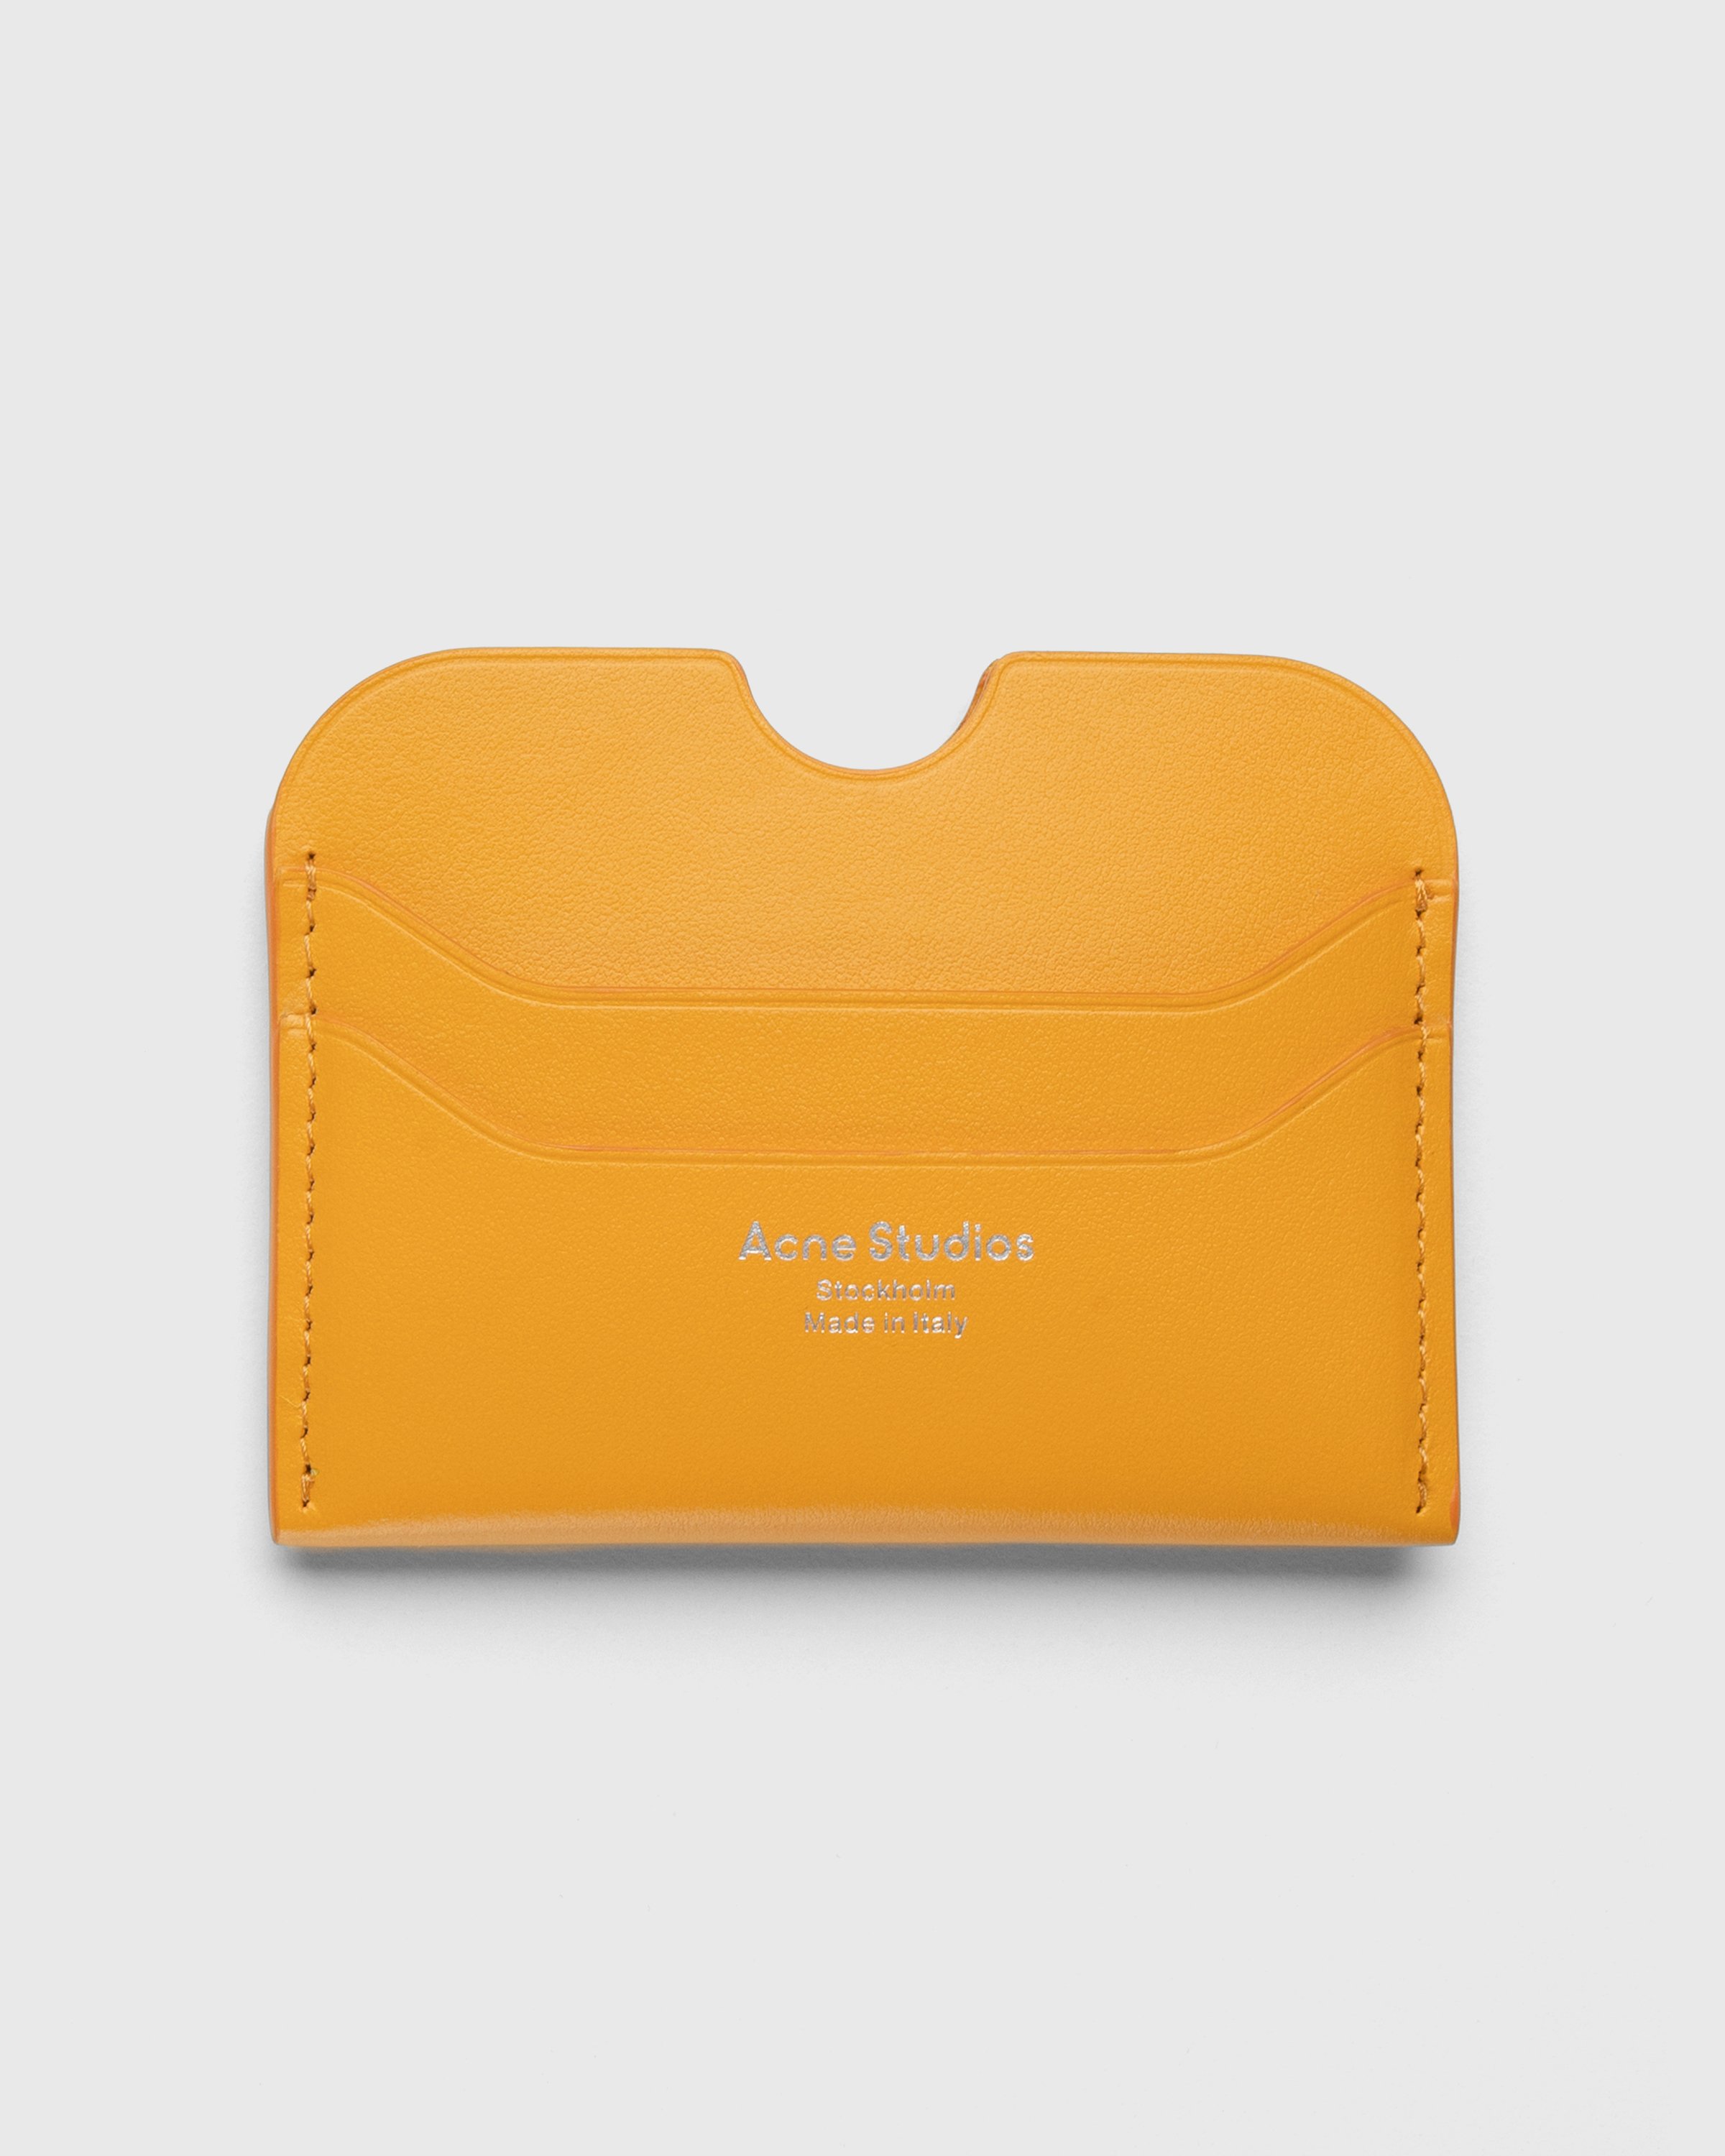 Acne Studios - Leather Card Holder Orange - Accessories - Orange - Image 1